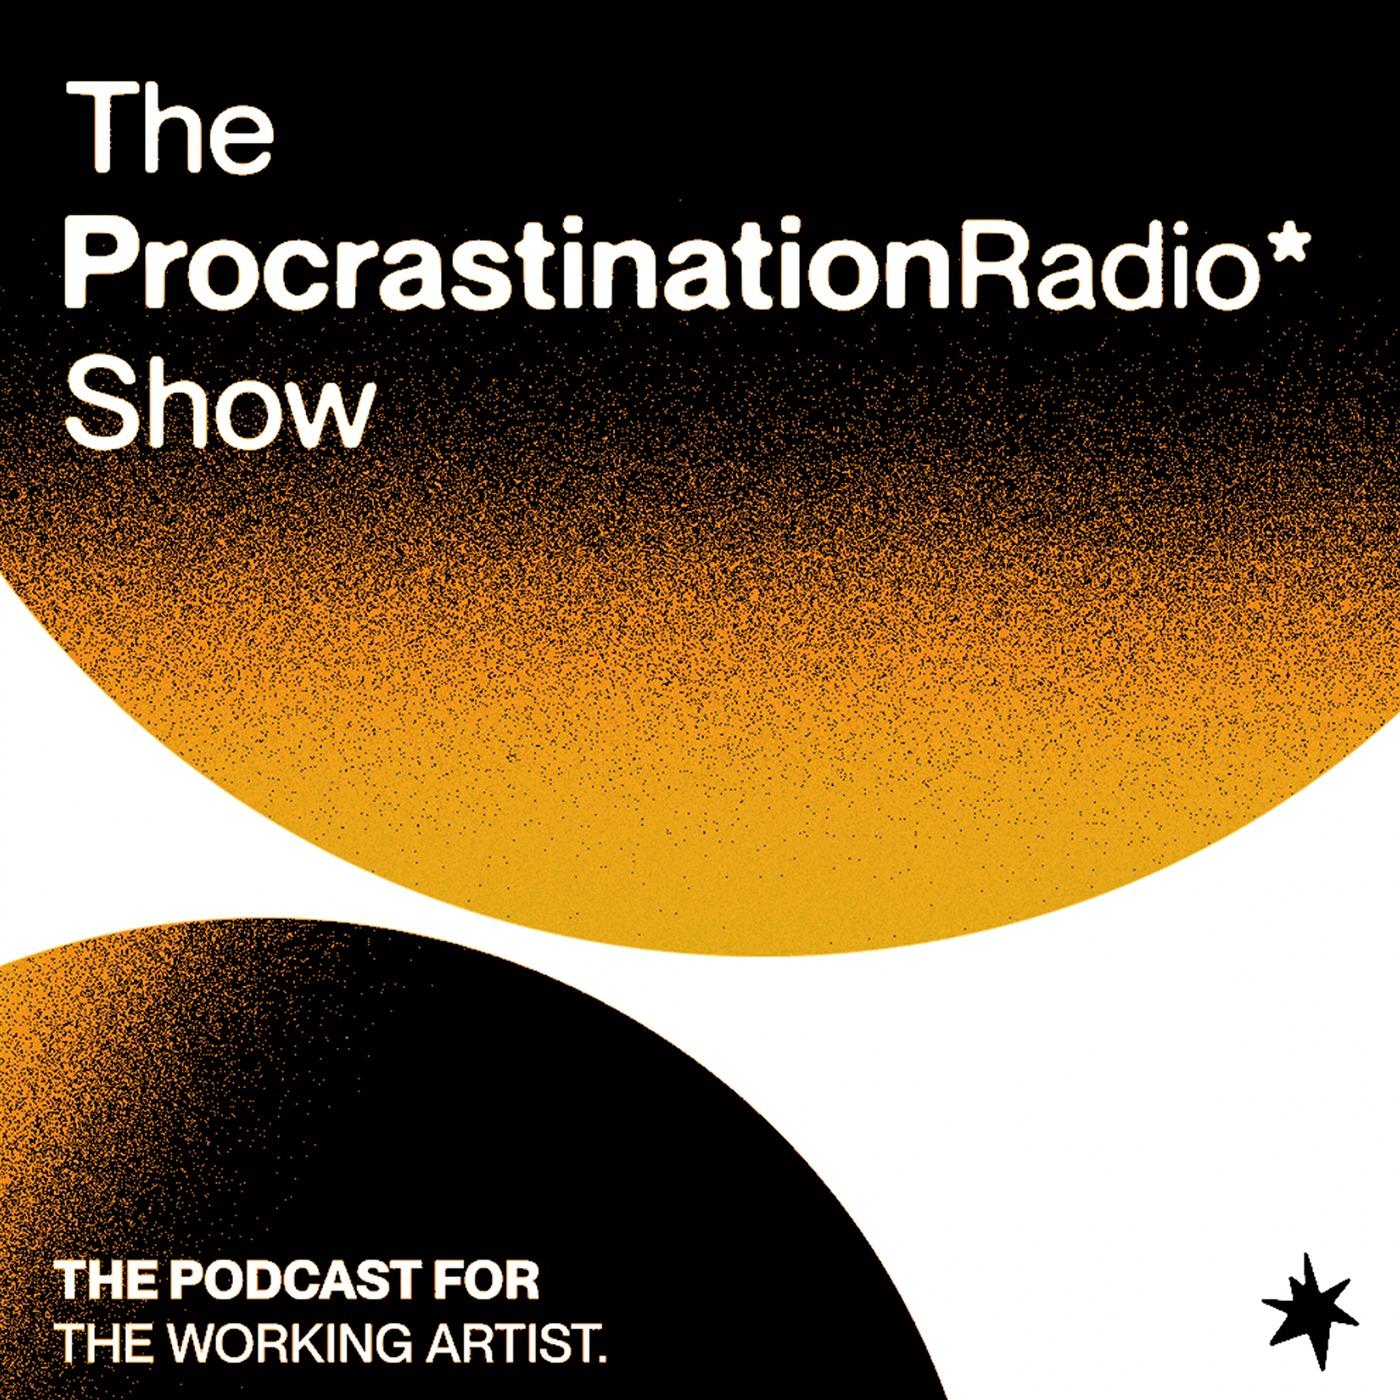 TheProcrastinationRadioShow*